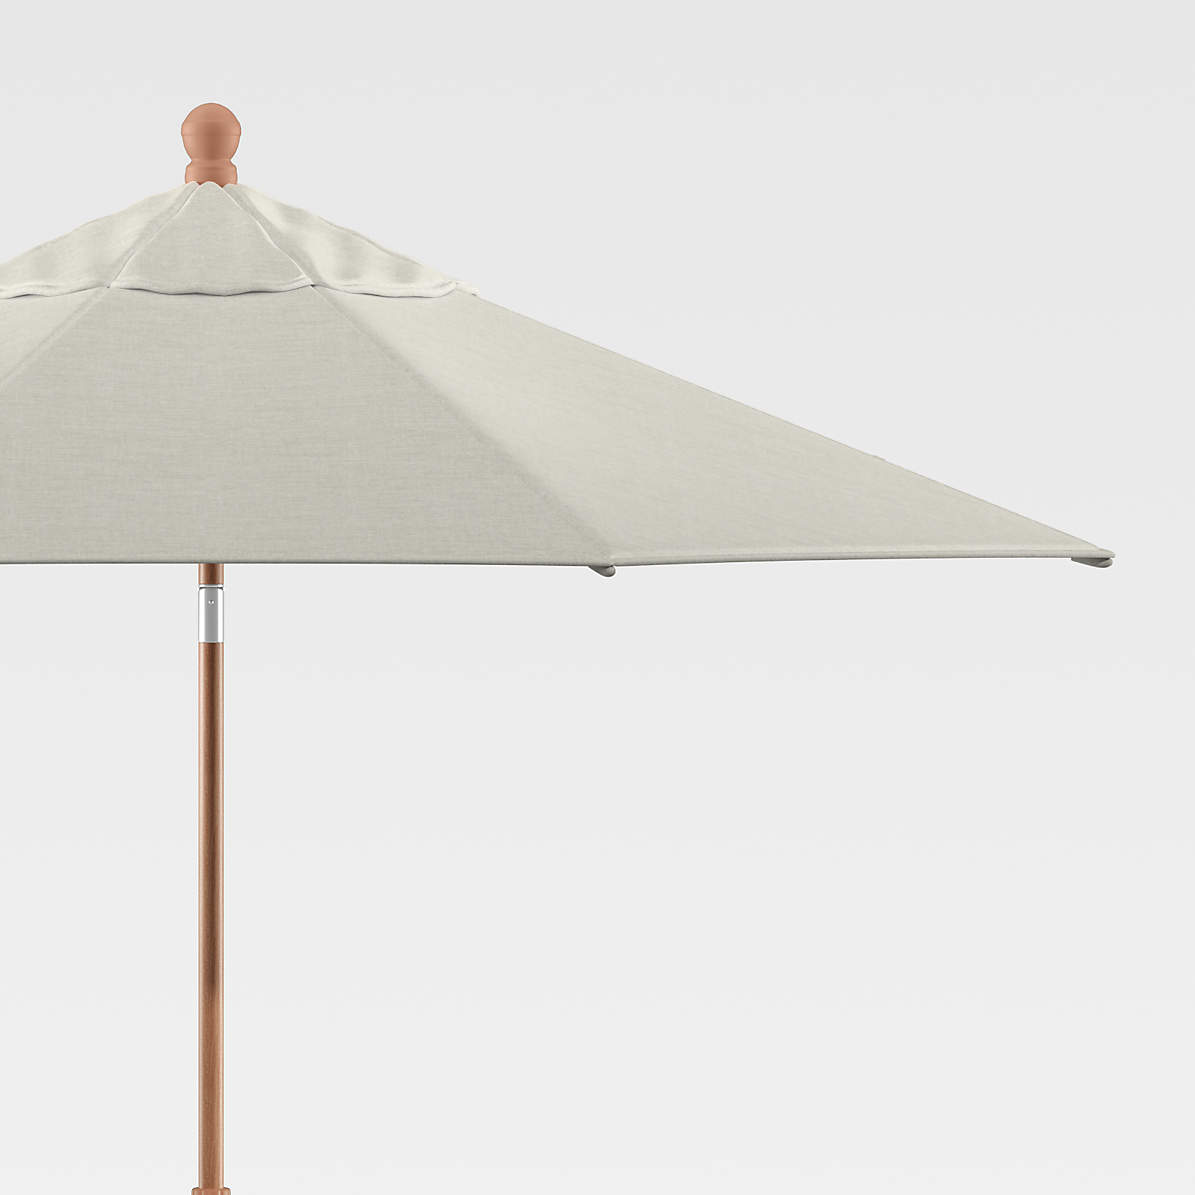 Outdoor Lounge Leather Sofa Parasol Sun Umbrella Shade Luxury Stock Photo -  Download Image Now - iStock